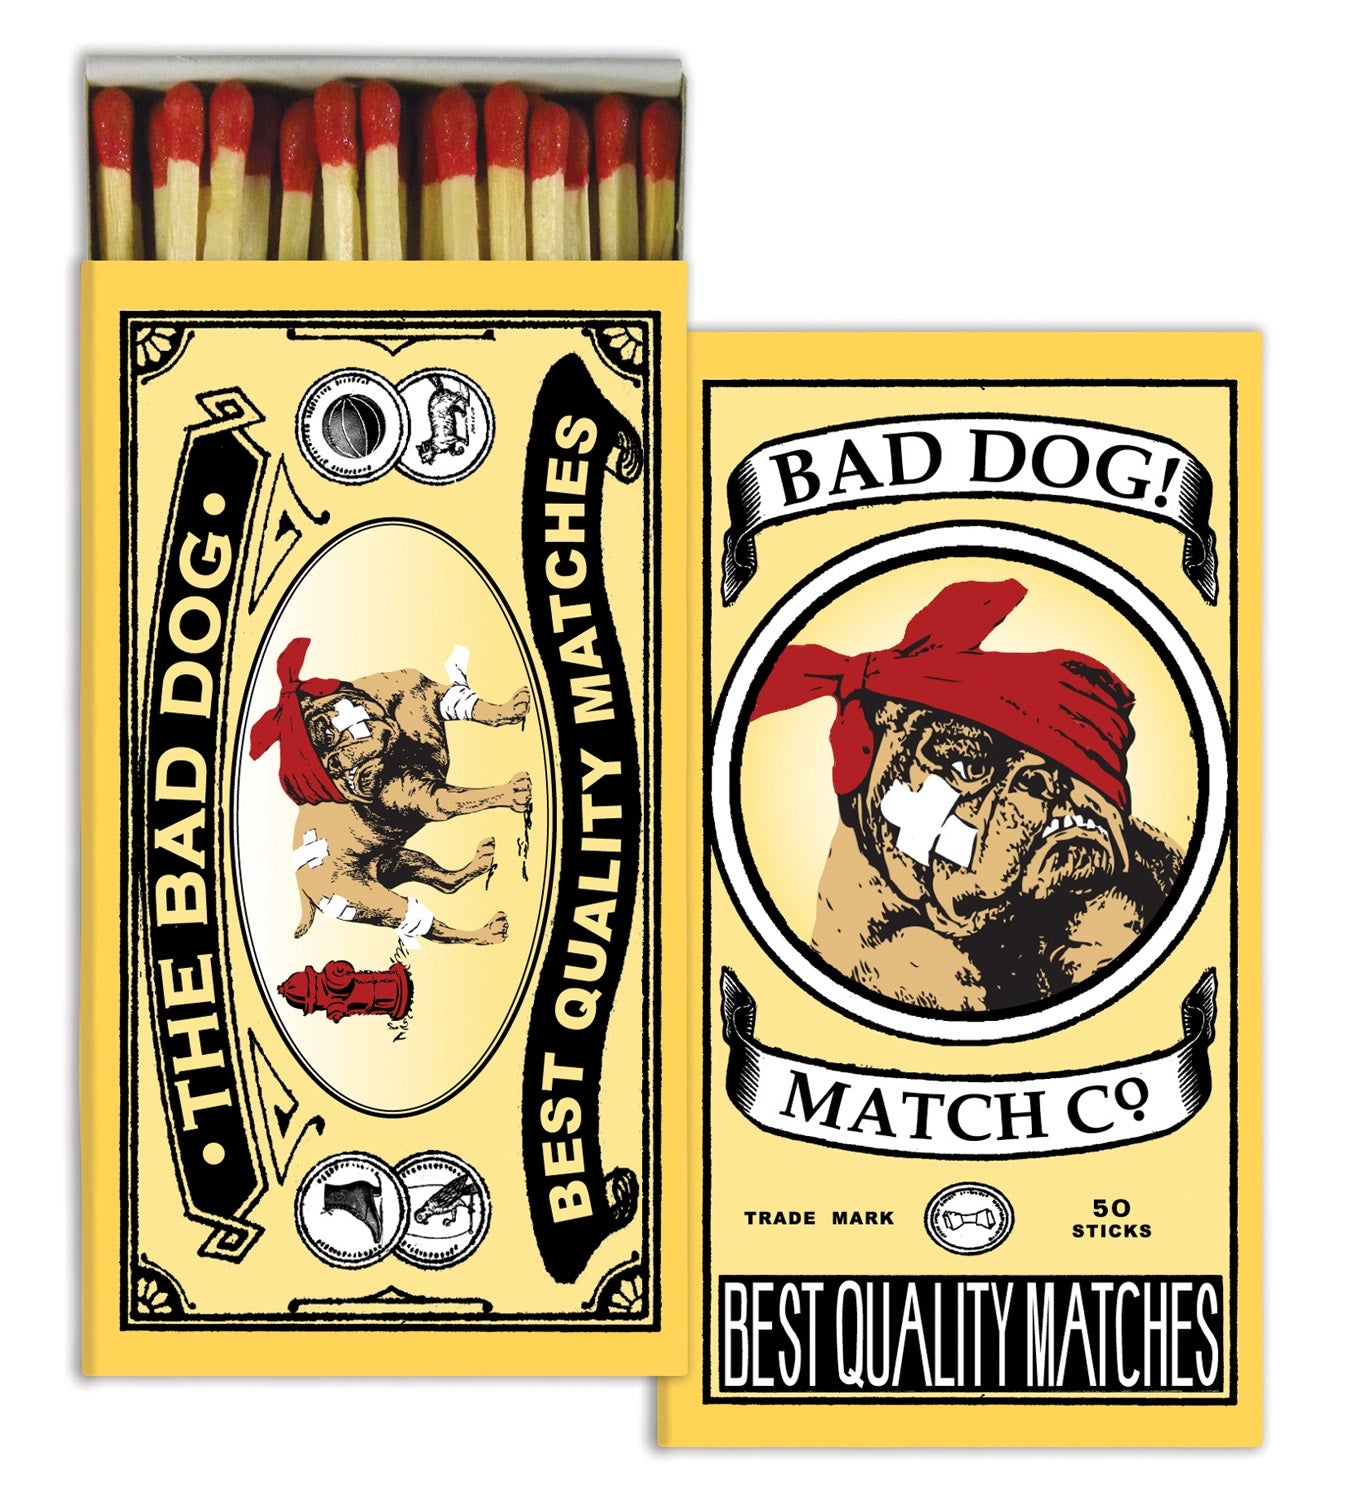 Matches - Bad Dog